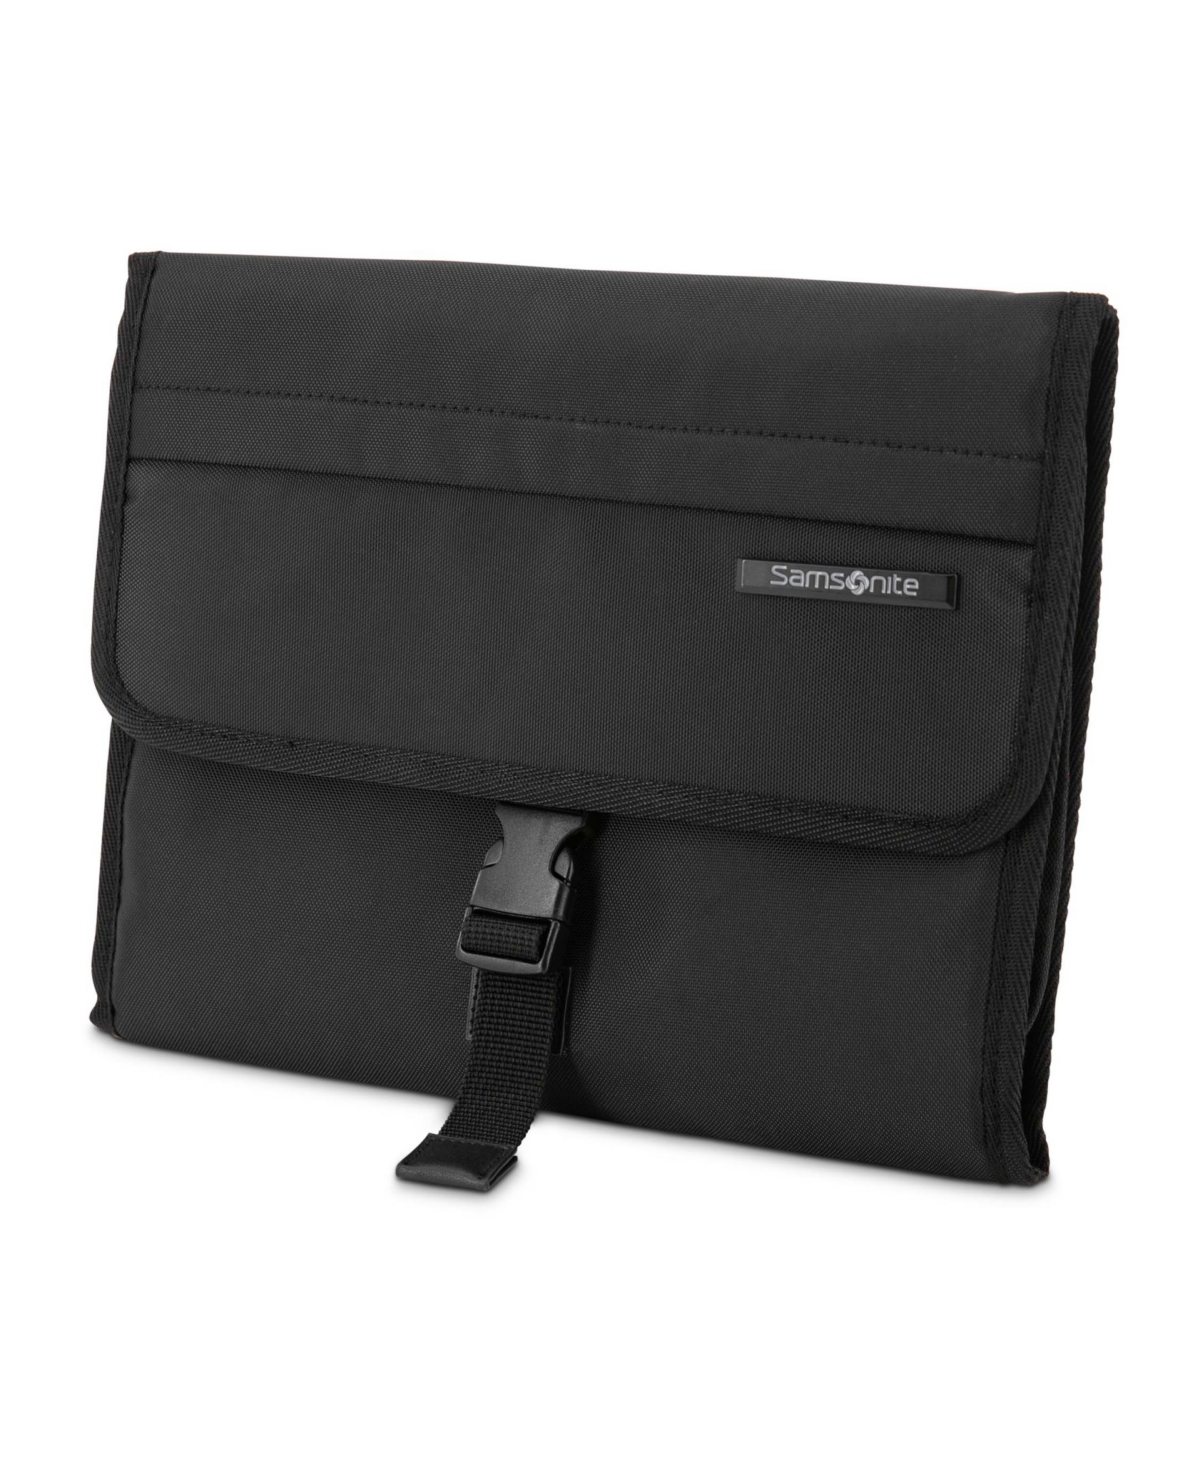 Samsonite Companion Hanging Folder Travel Kit Bag In Black